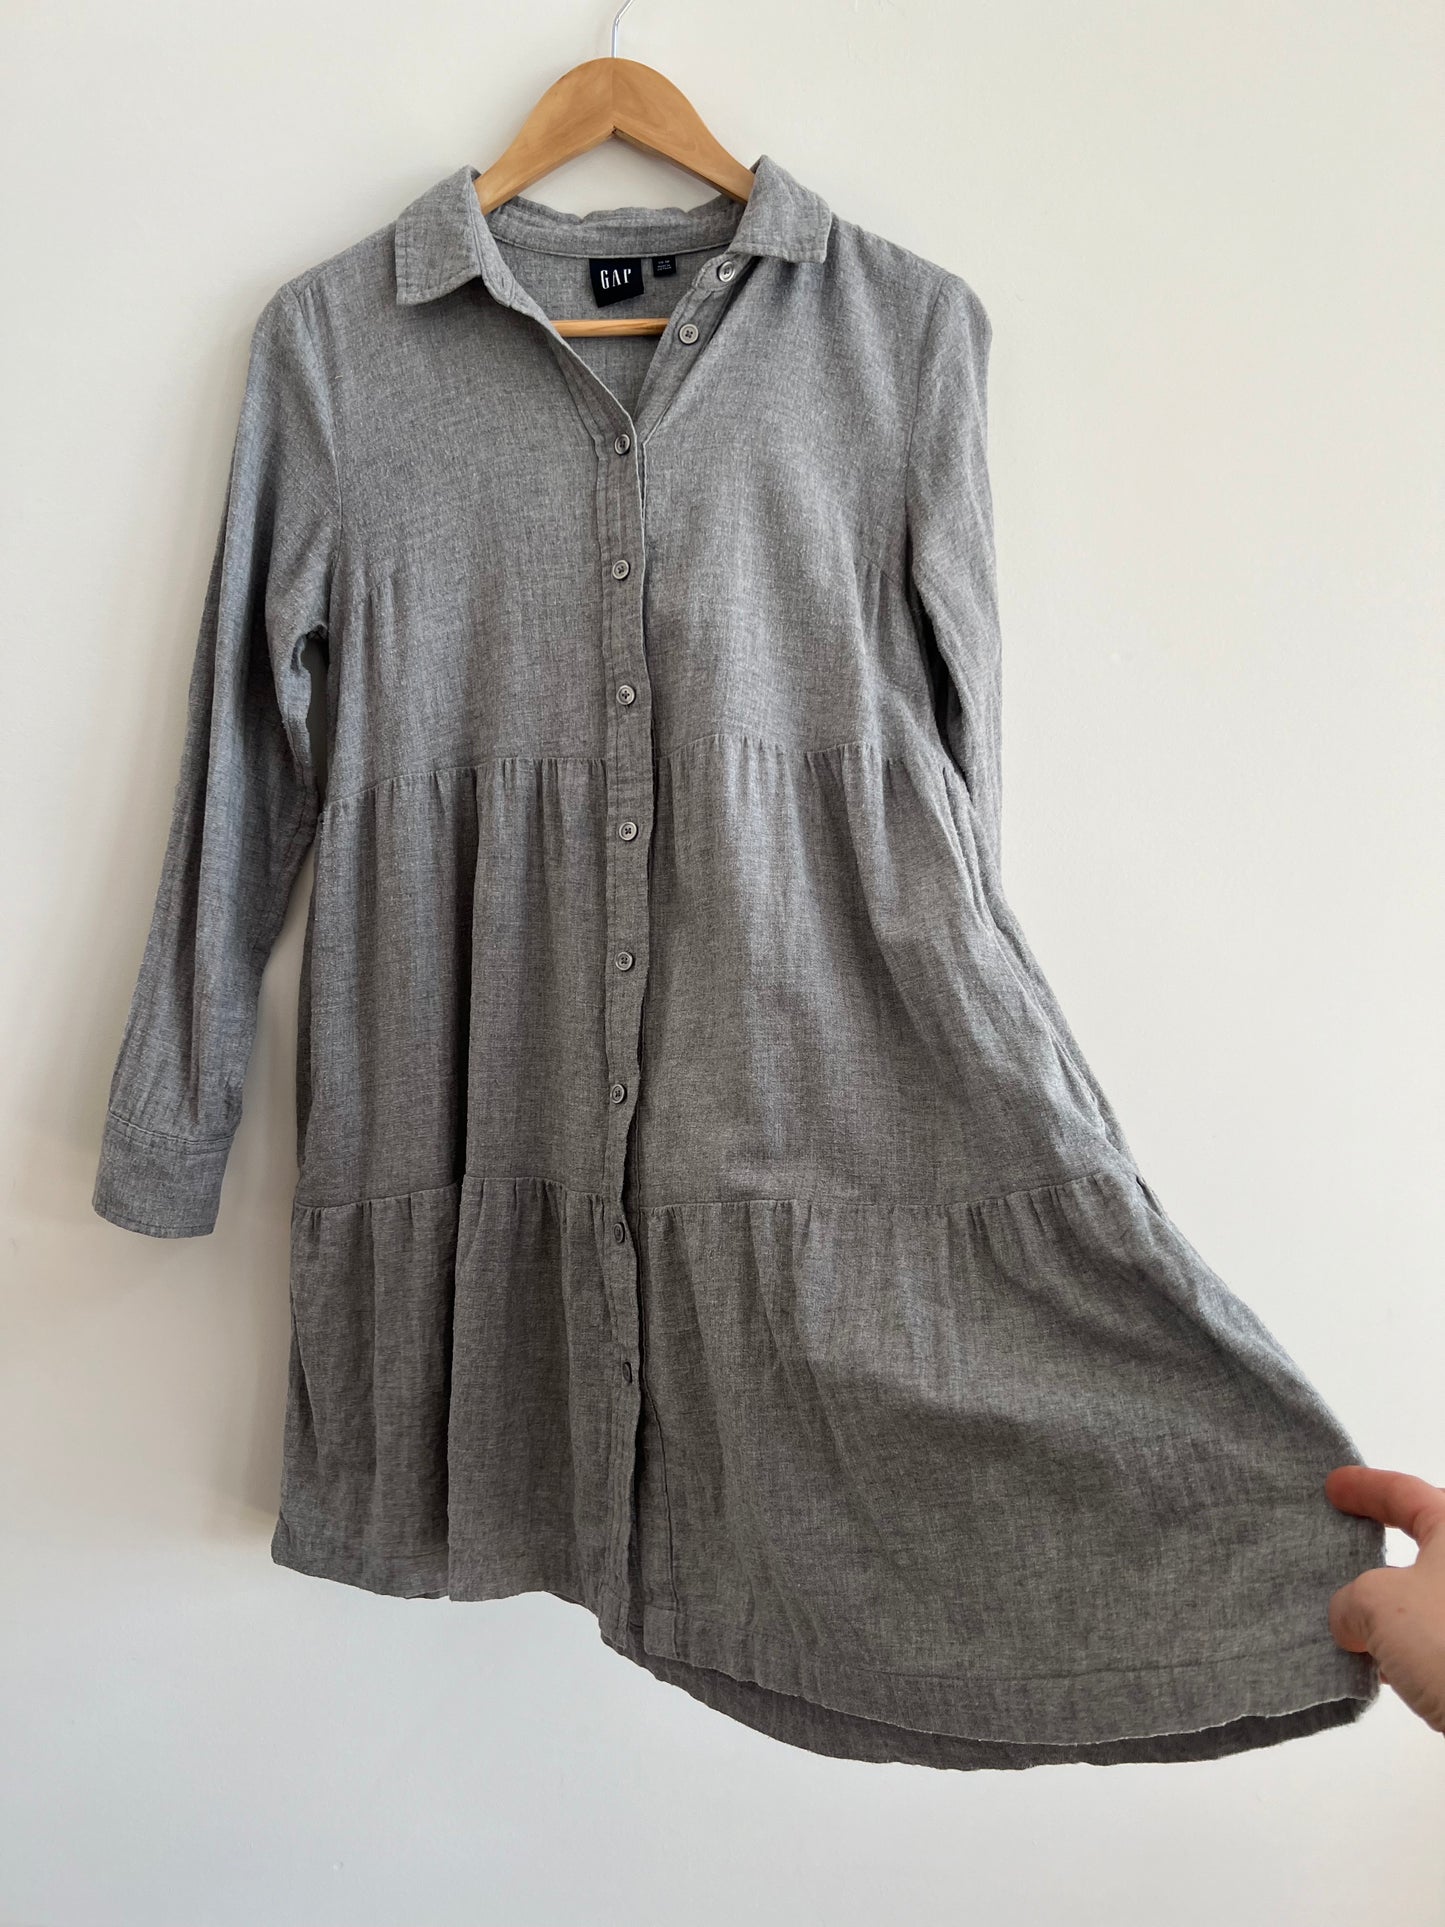 GAP Flannel Tiered Shirt Dress (XS)